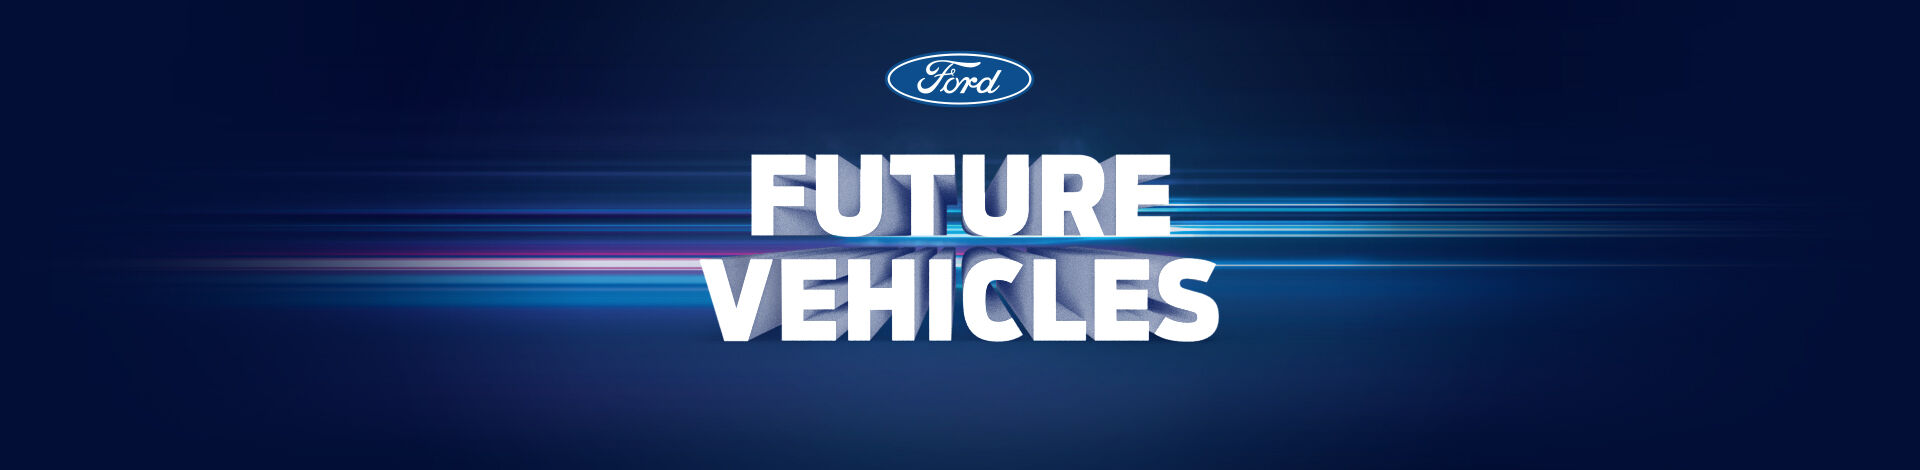 Future Vehicles